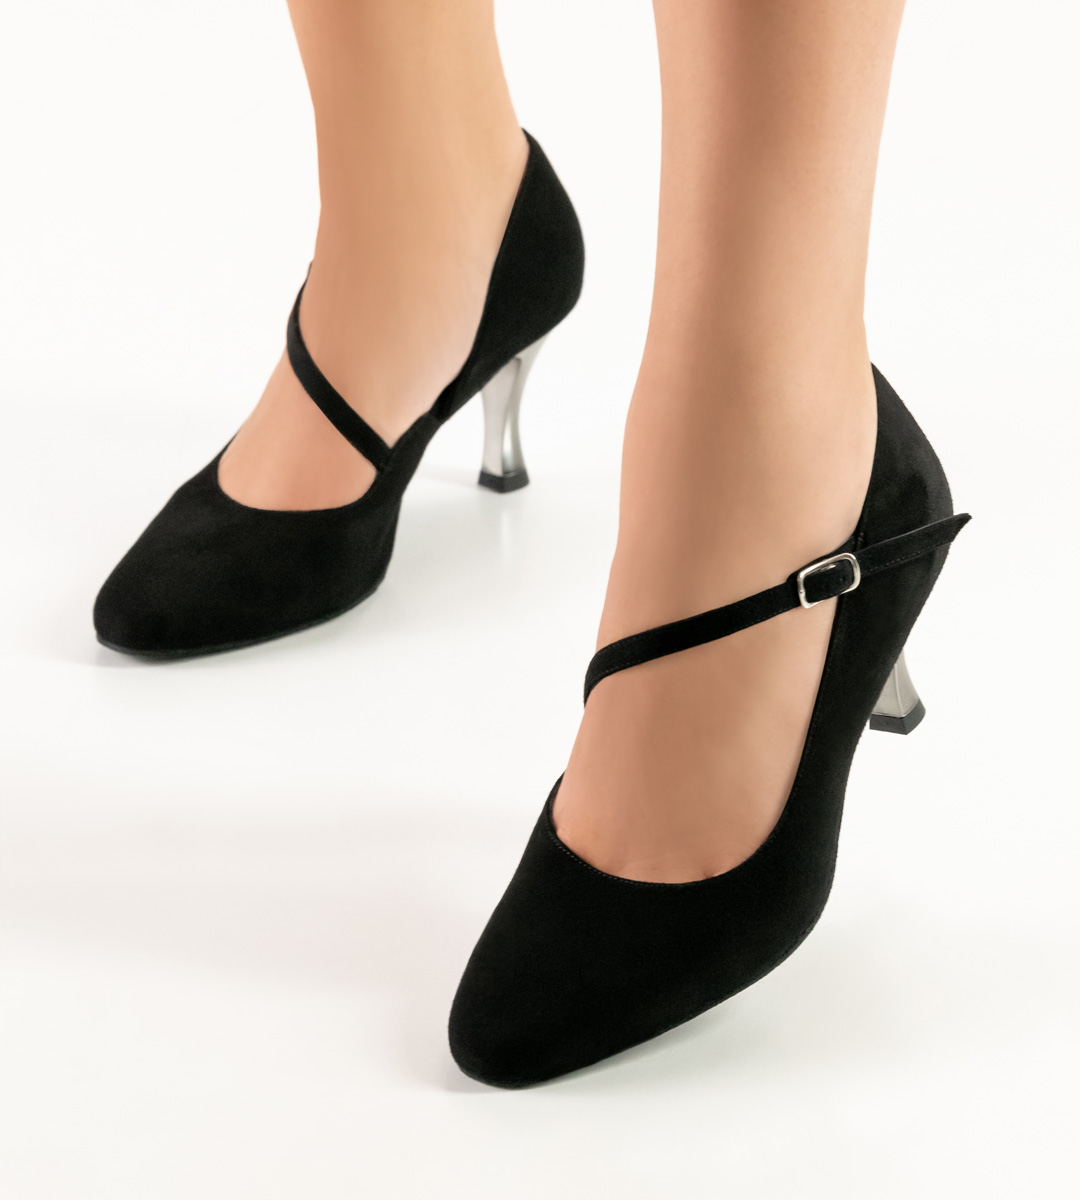 6.5 cm closed Werner Kern ladies' dance shoe with instep strap